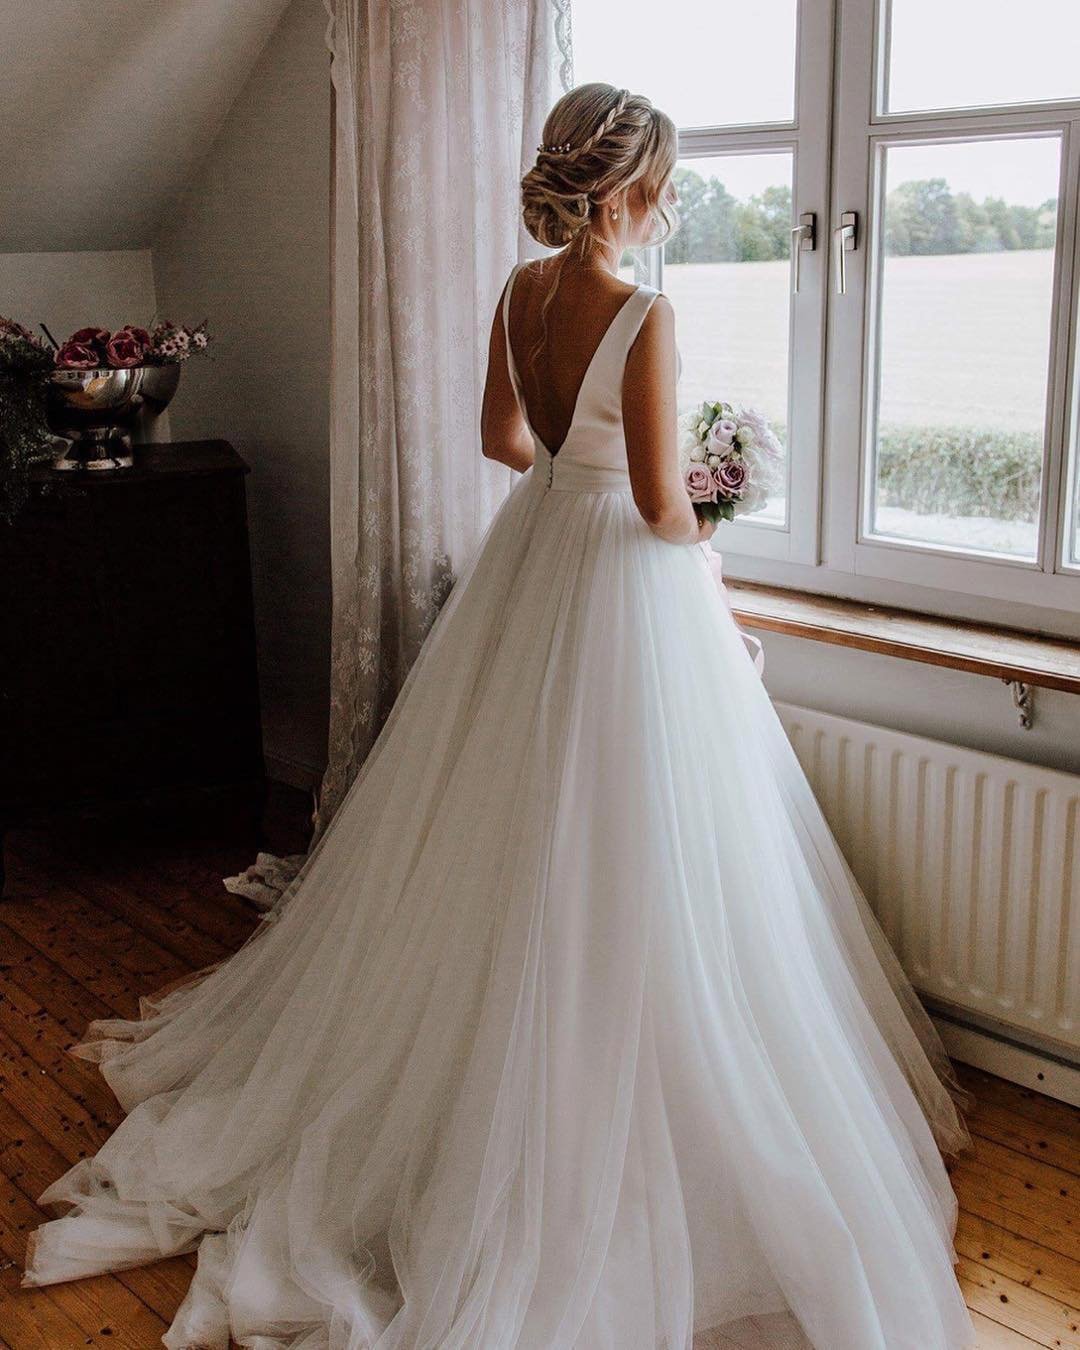 SIMPLE WEDDING DRESSES FOR ELEGANT BRIDES